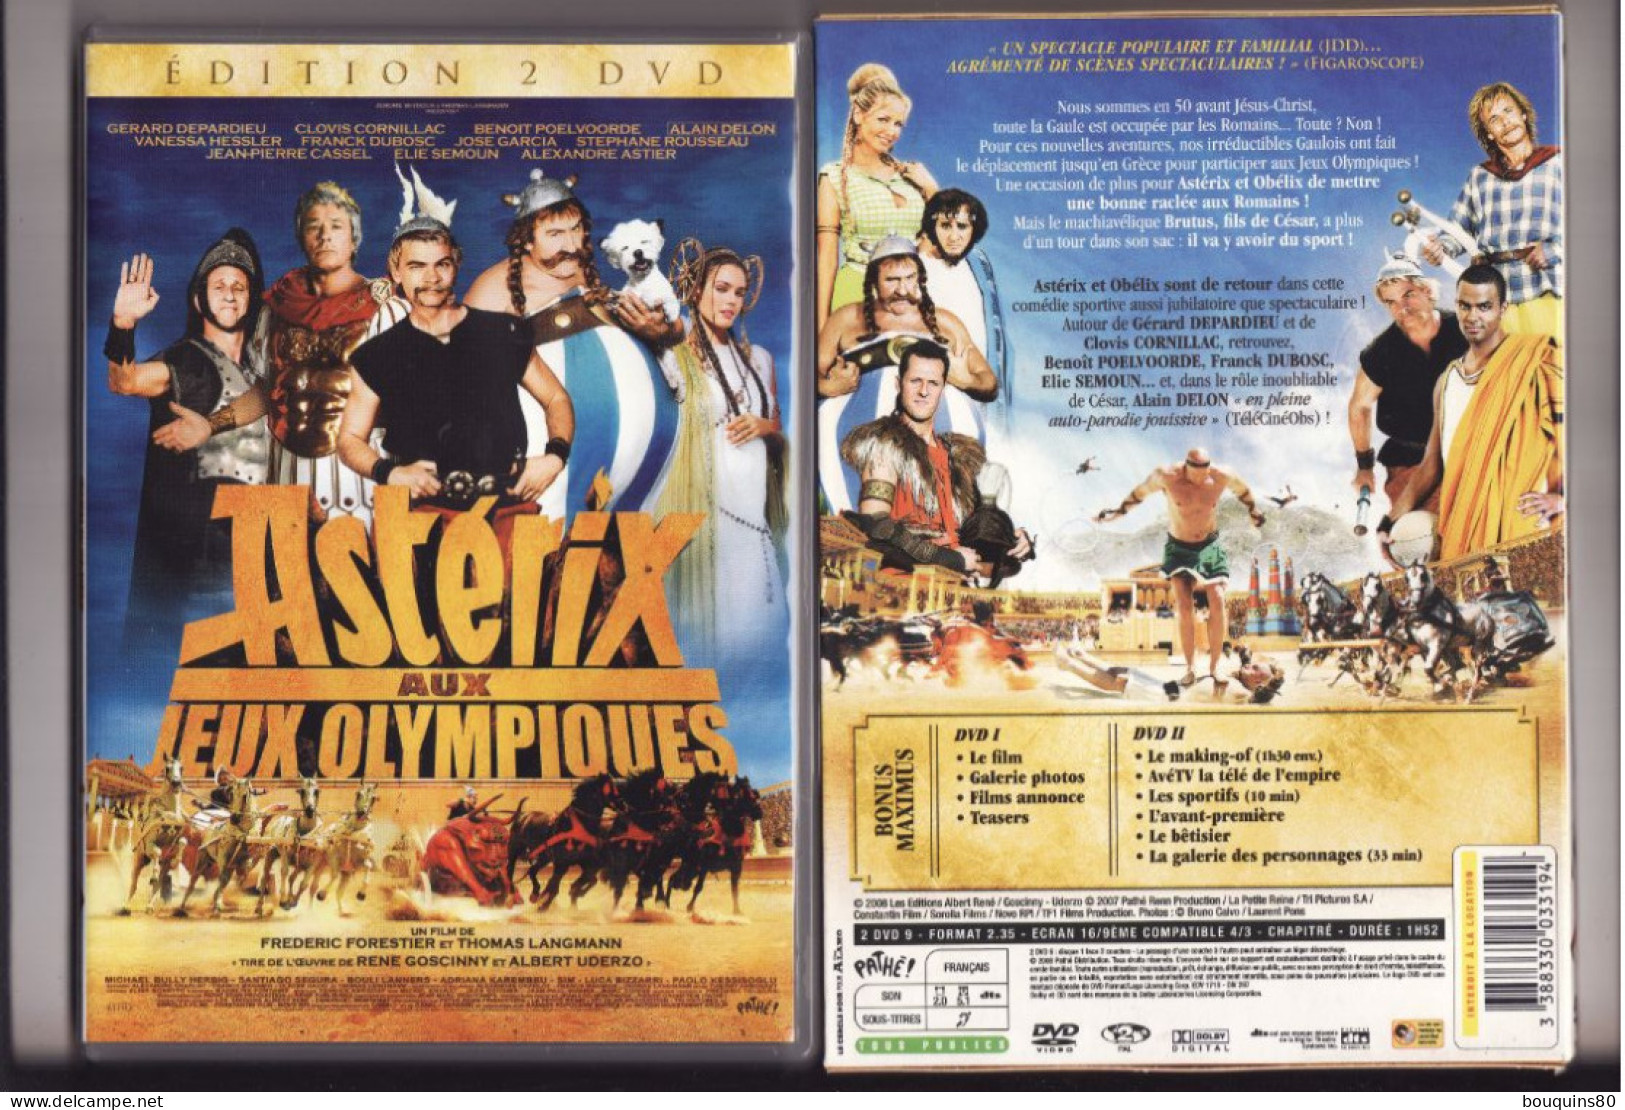 ASTERIX AUX JEUX OLYMPIQUES 2 DVD - Comedy